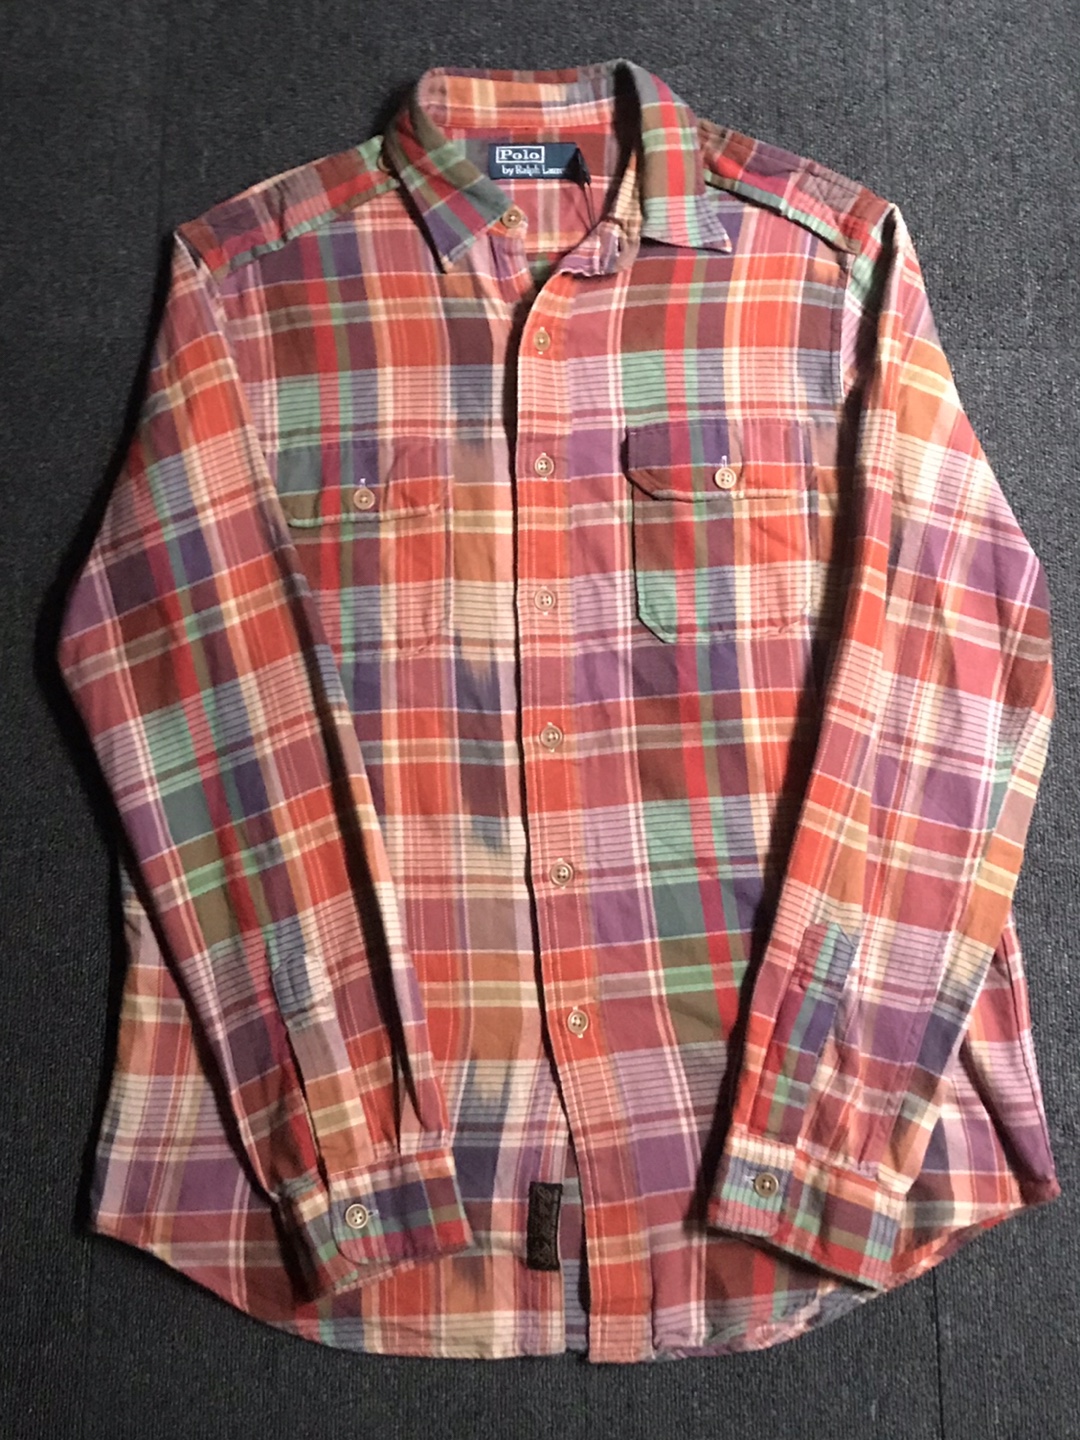 Polo RL cotton navajo plaid military work shirt (L size, ~103 추천)